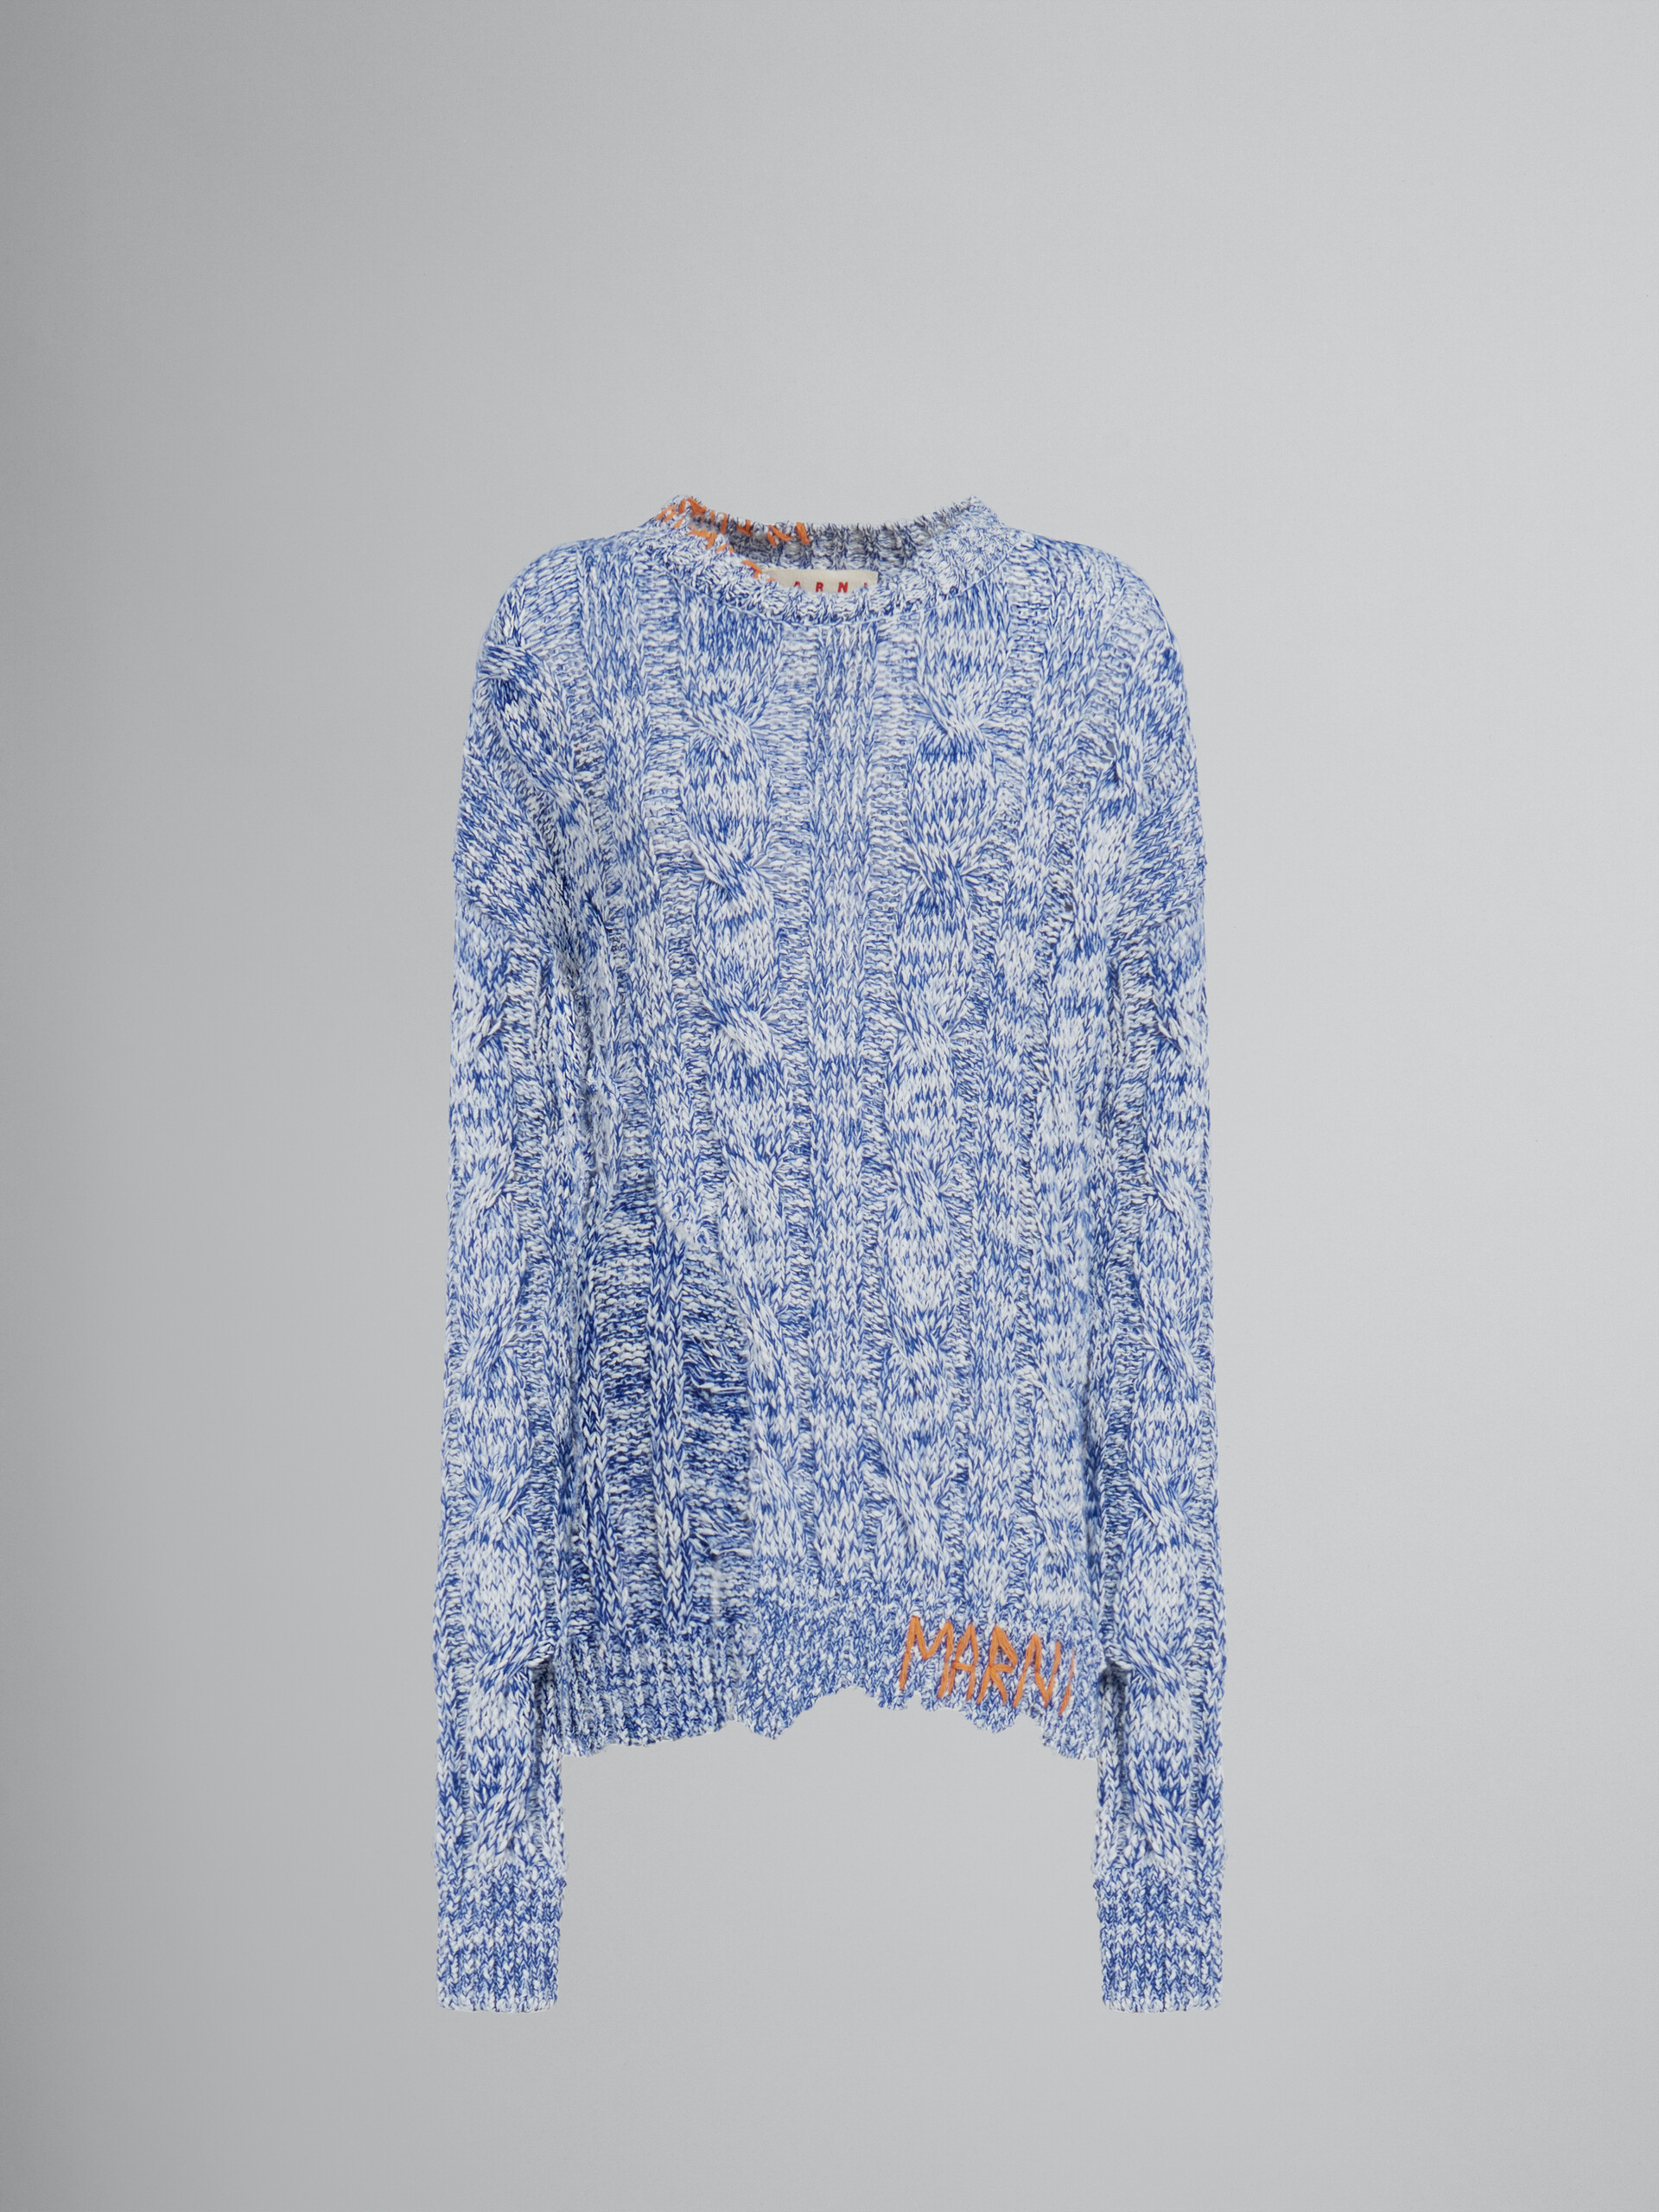 Jersey azul de mouliné con bordes deshilachados - jerseys - Image 1